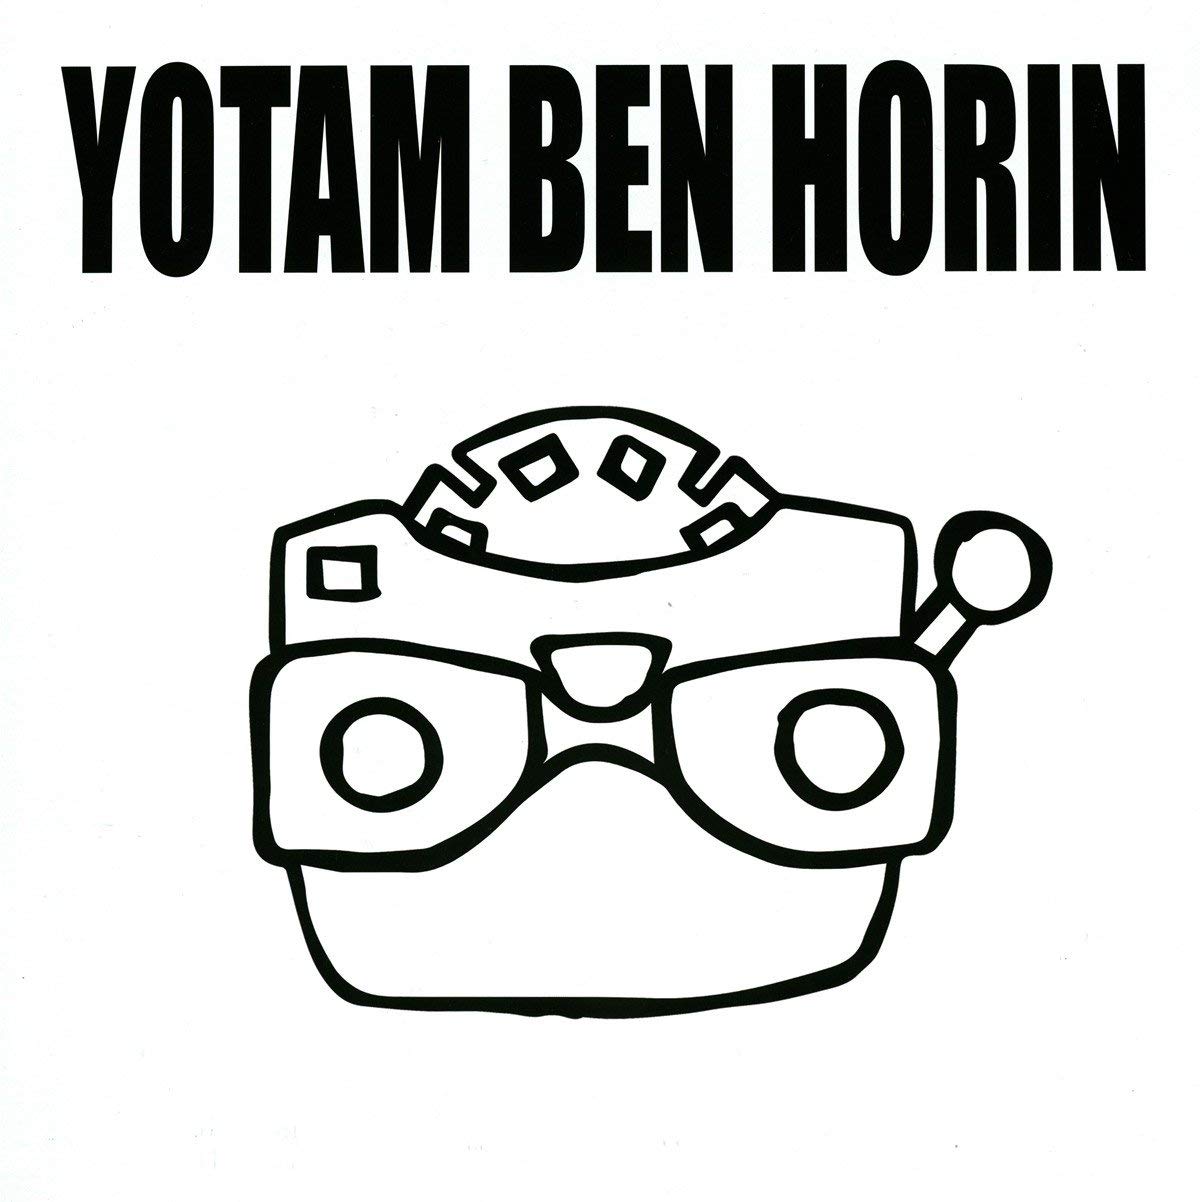 Yotam Ben Horin - One Week Record